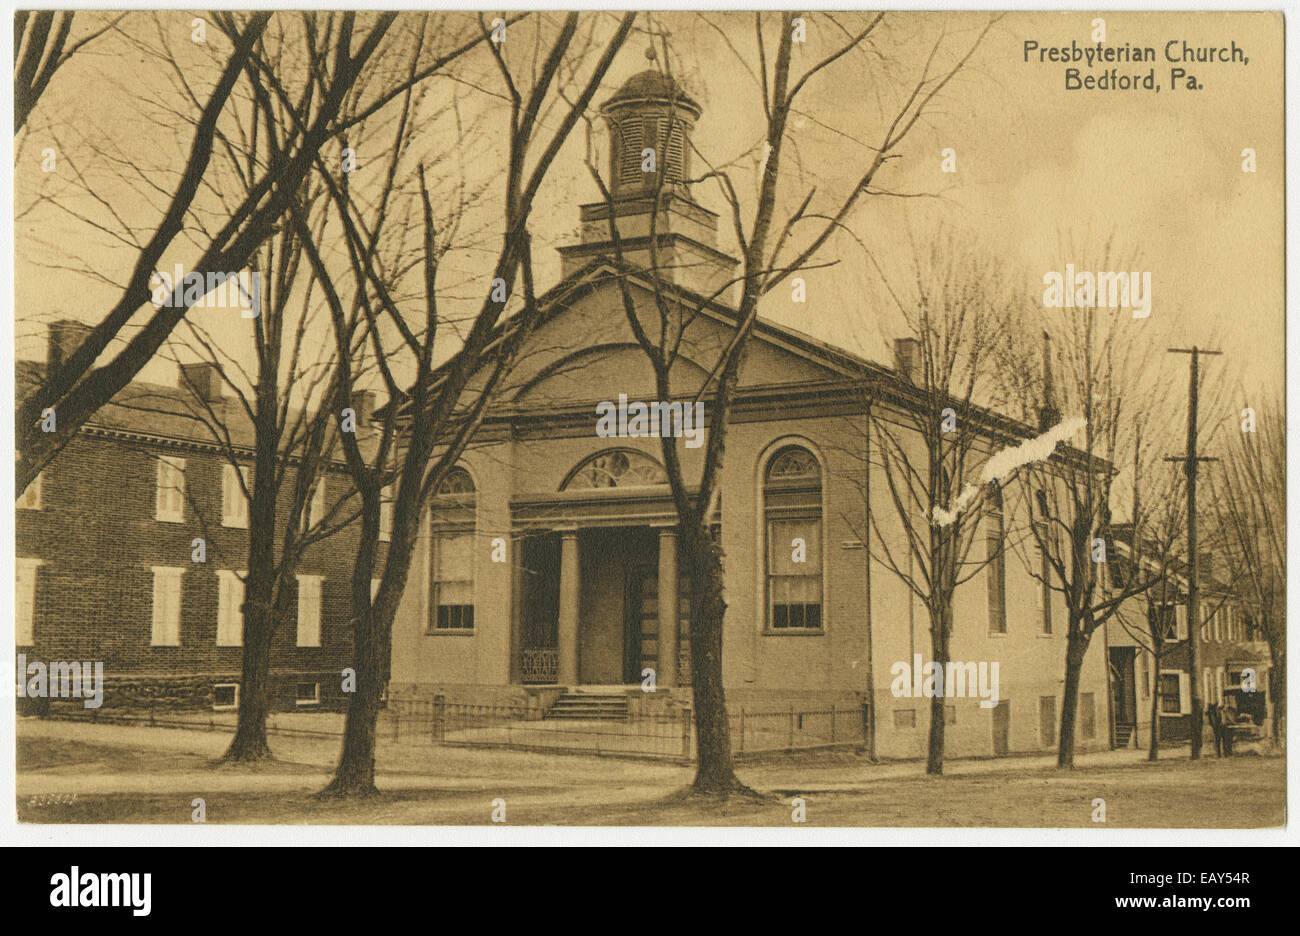 Presbyterianische Kirche in Bedford, Pennsylvania nach einer Pre-1923 Postkarte von RG-428 Postkarten-Kollektion Stockfoto